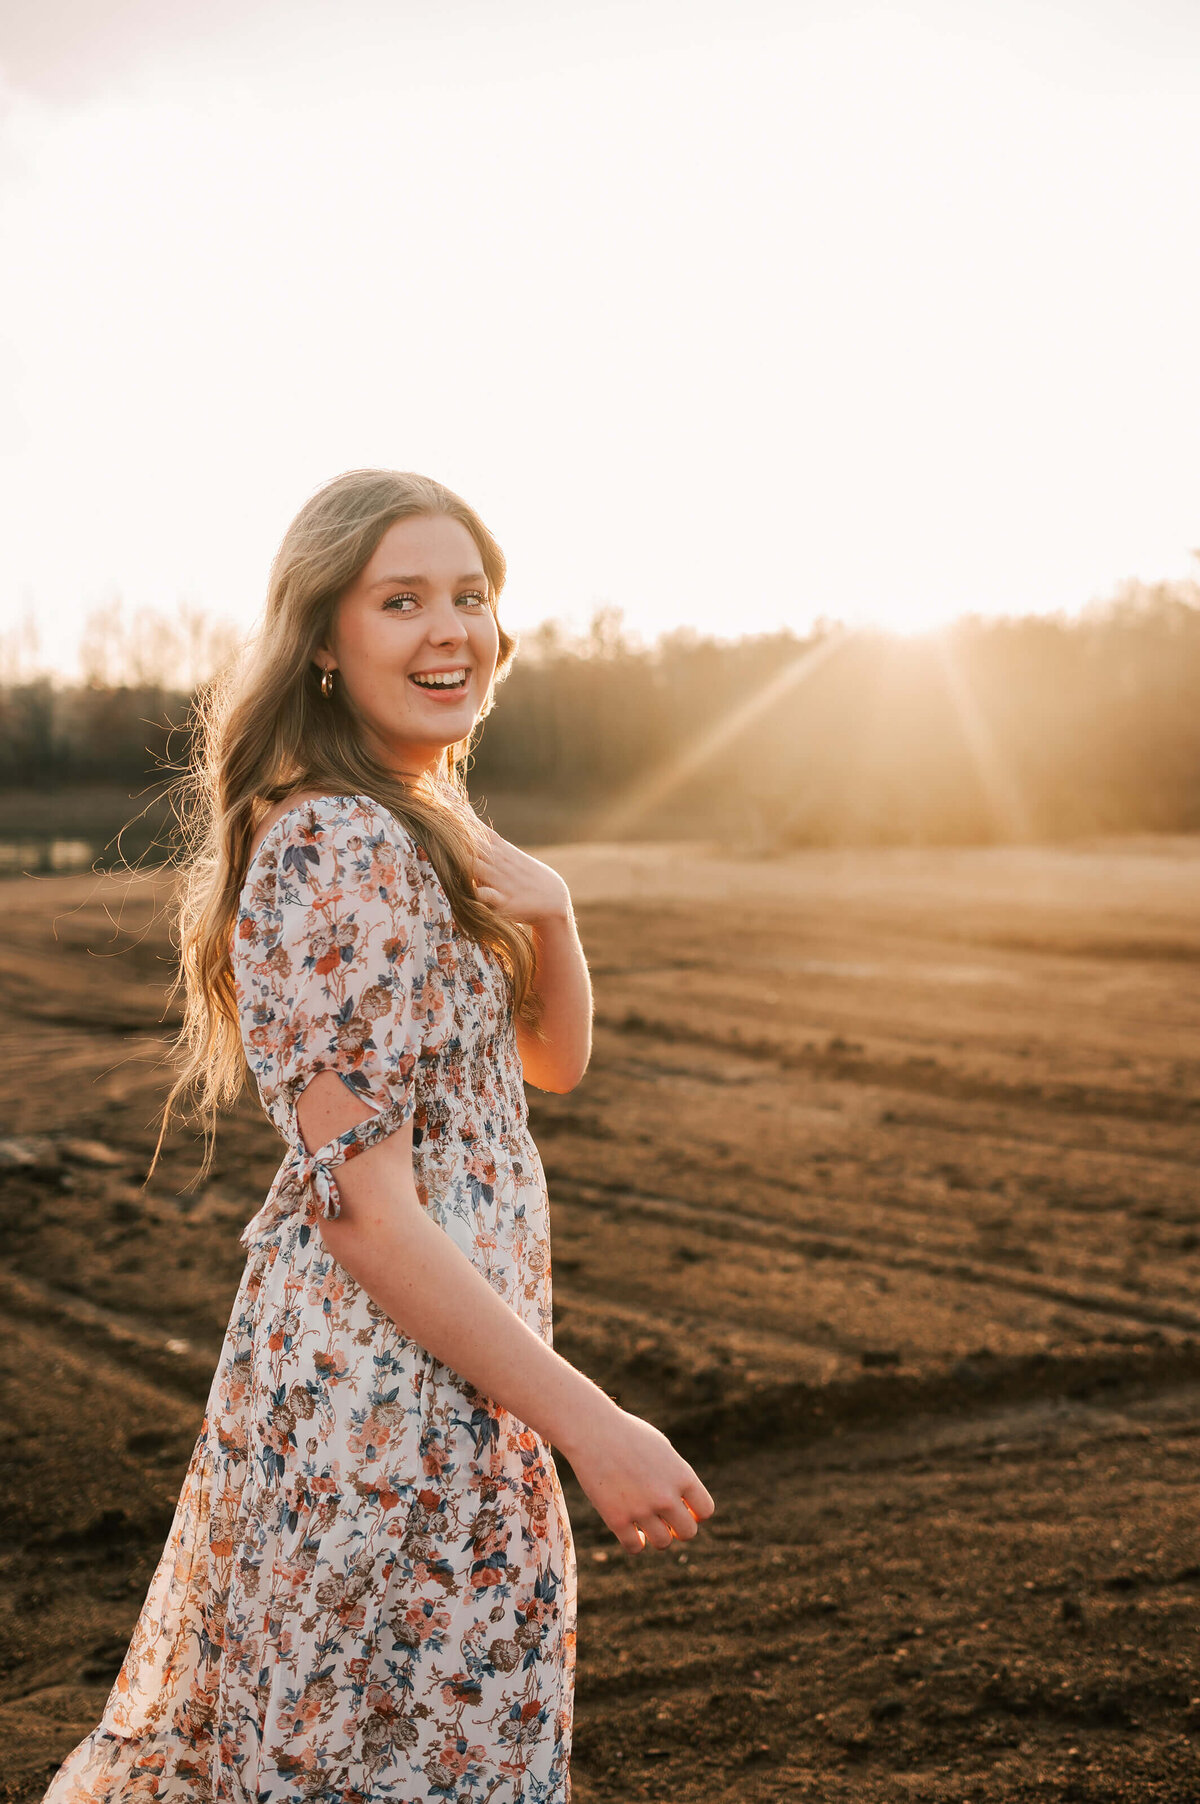 Springfield MO senior photographer captures teen girl laughing at sunset outdoors